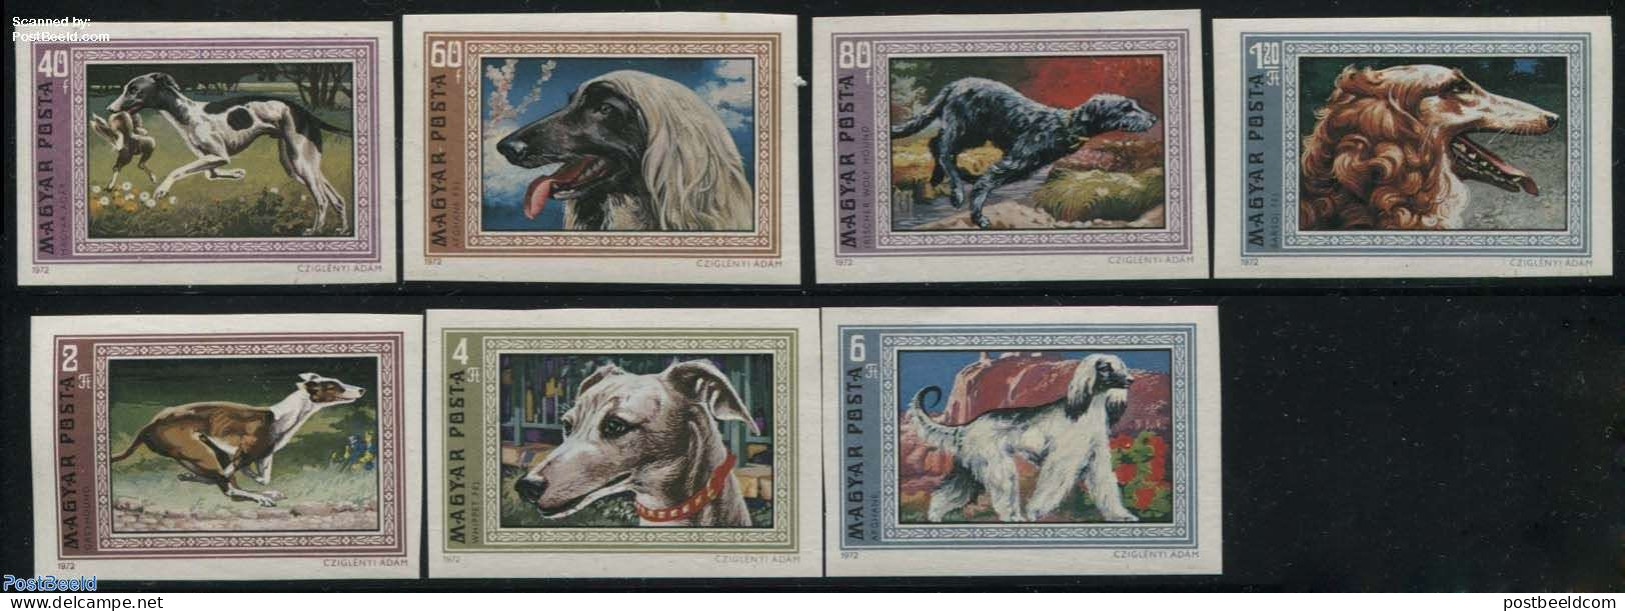 Hungary 1972 Dogs 7v Imperforated, Unused (hinged), Nature - Dogs - Ongebruikt